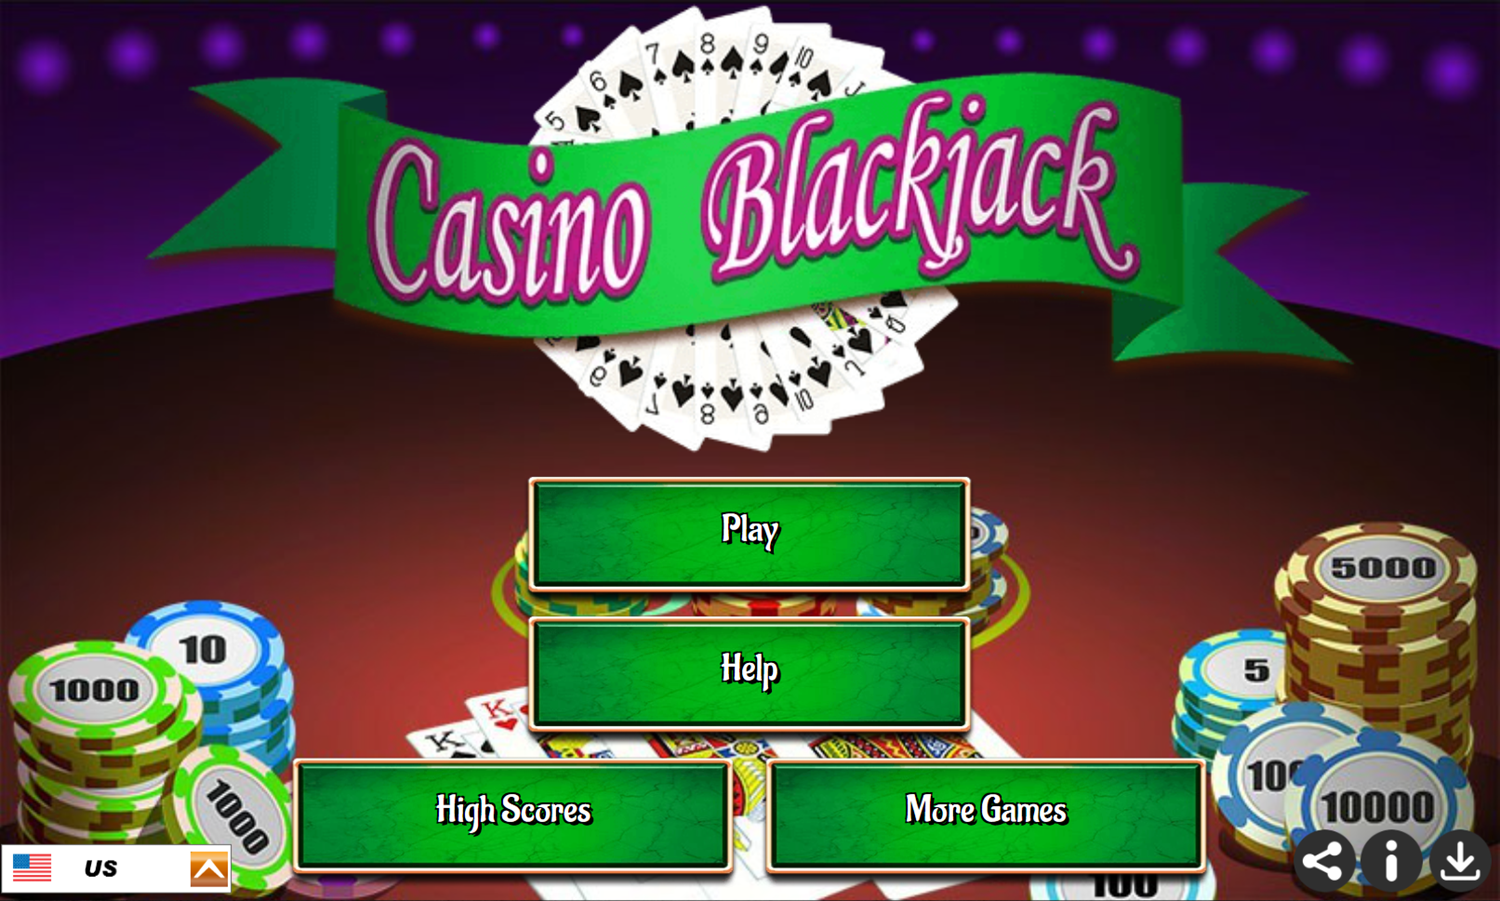 Casino Blackjack Game Welcome Screen Screenshot.